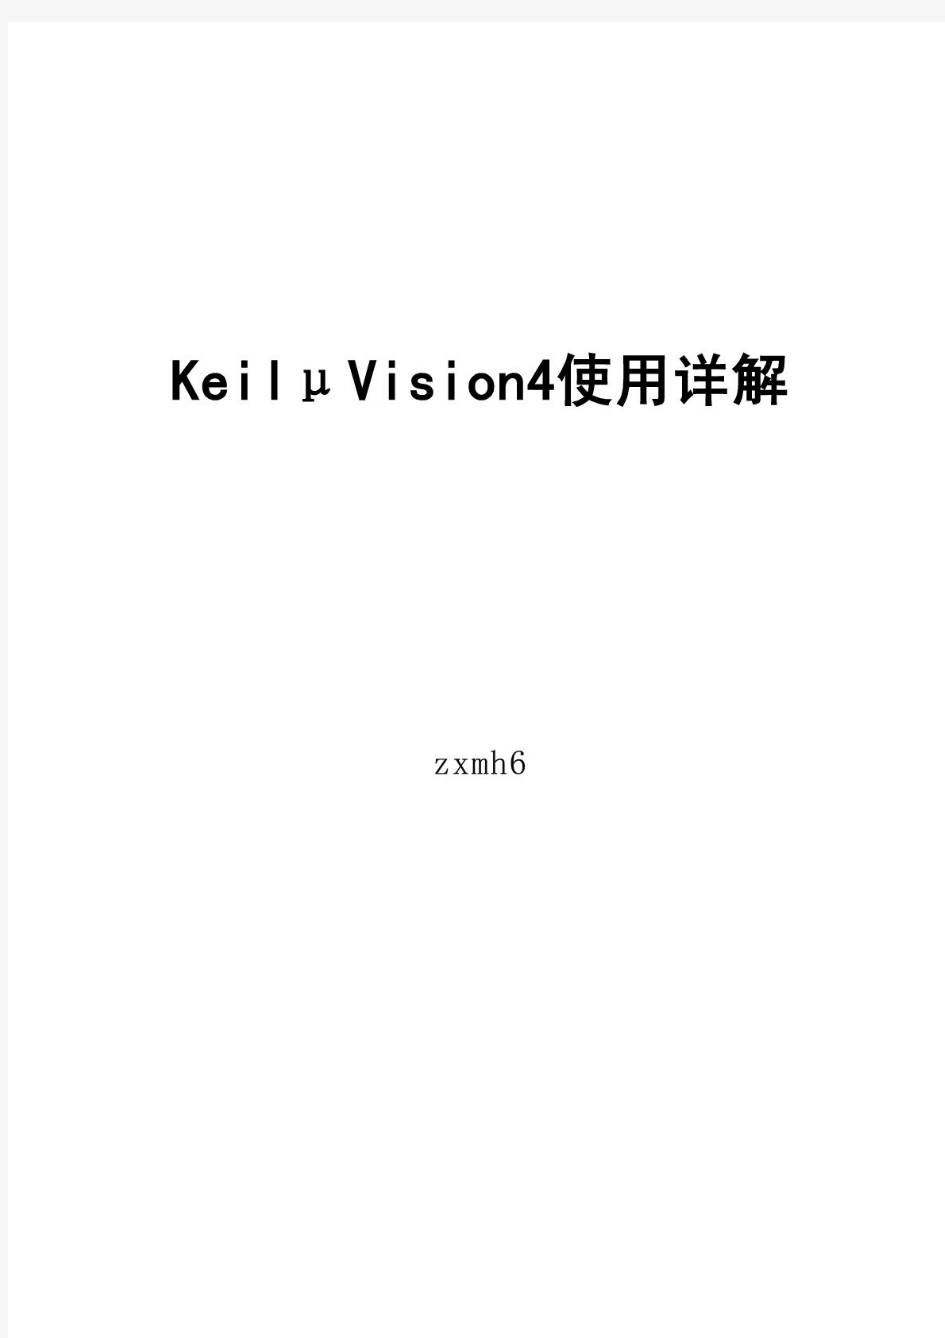 keil_μVision4使用详解教程